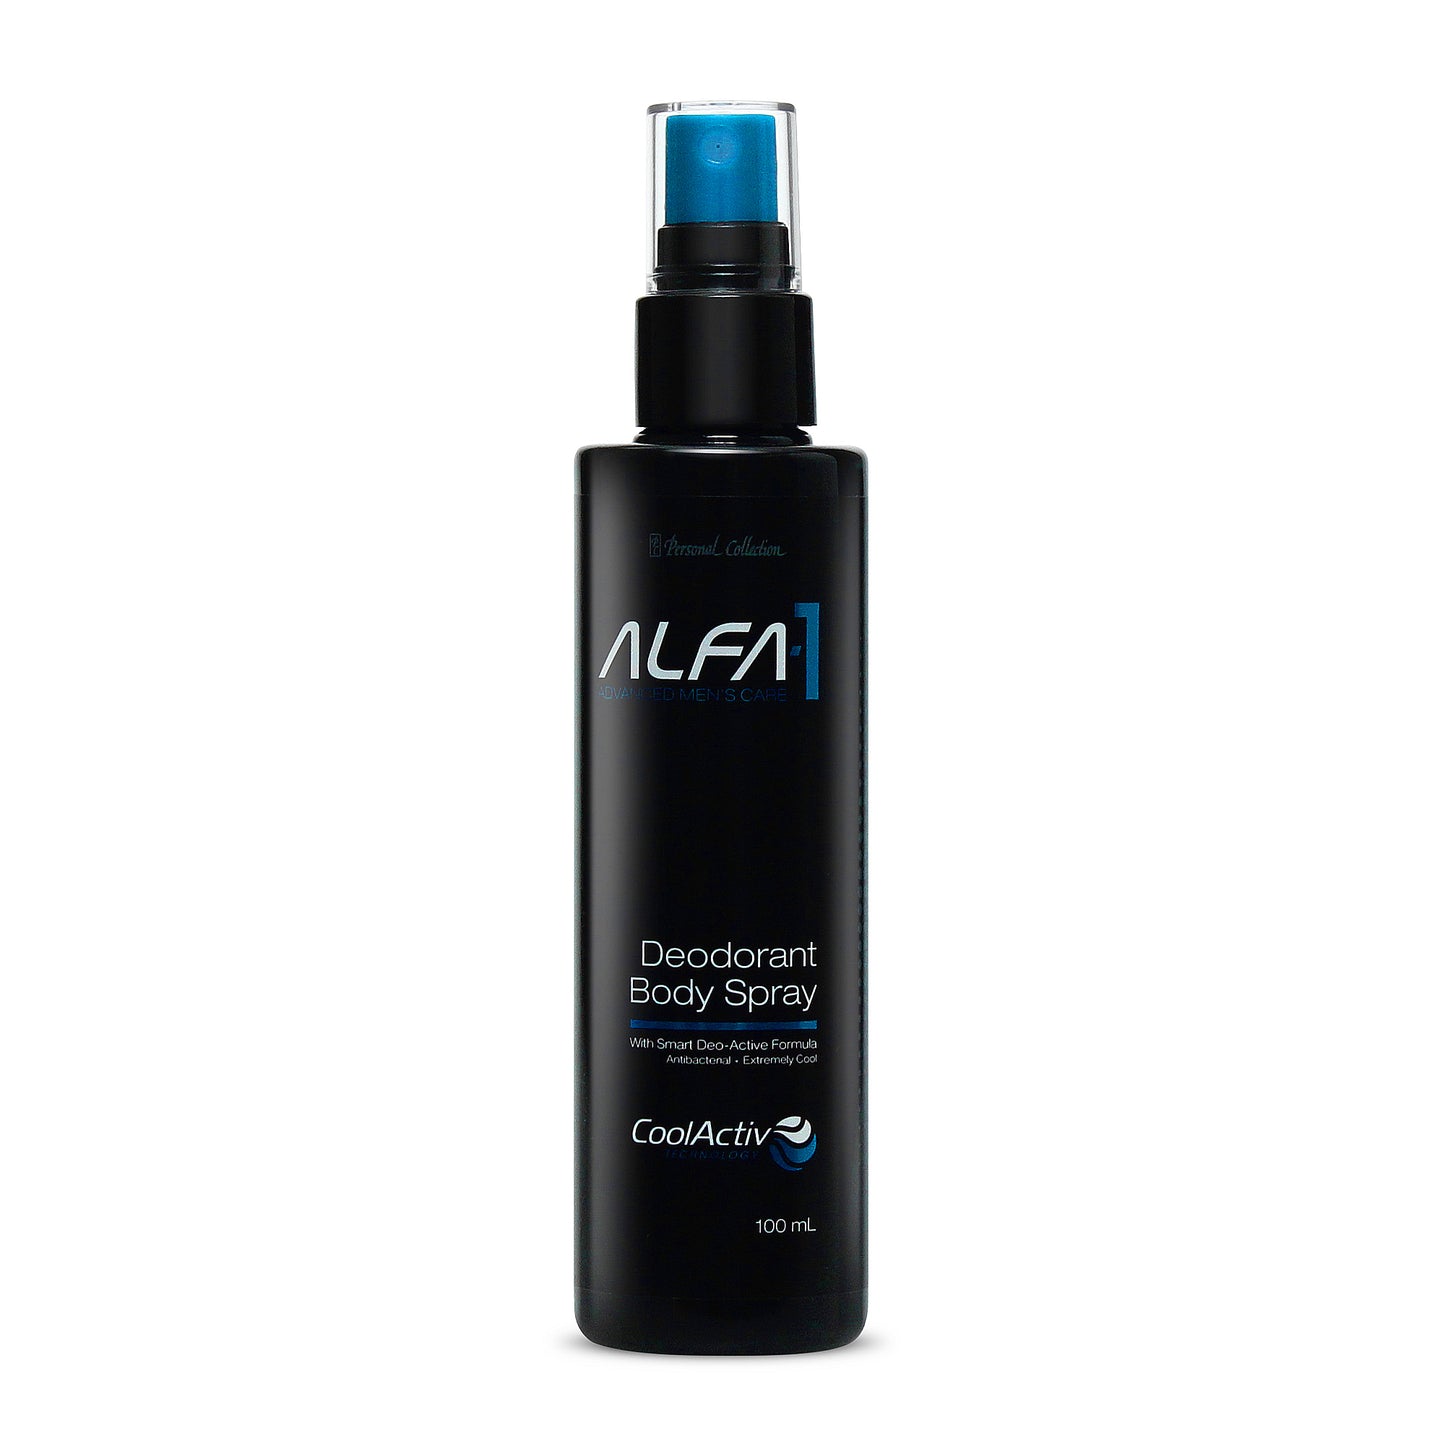 Alfa-1 Deodorant Body Spray 100 mL